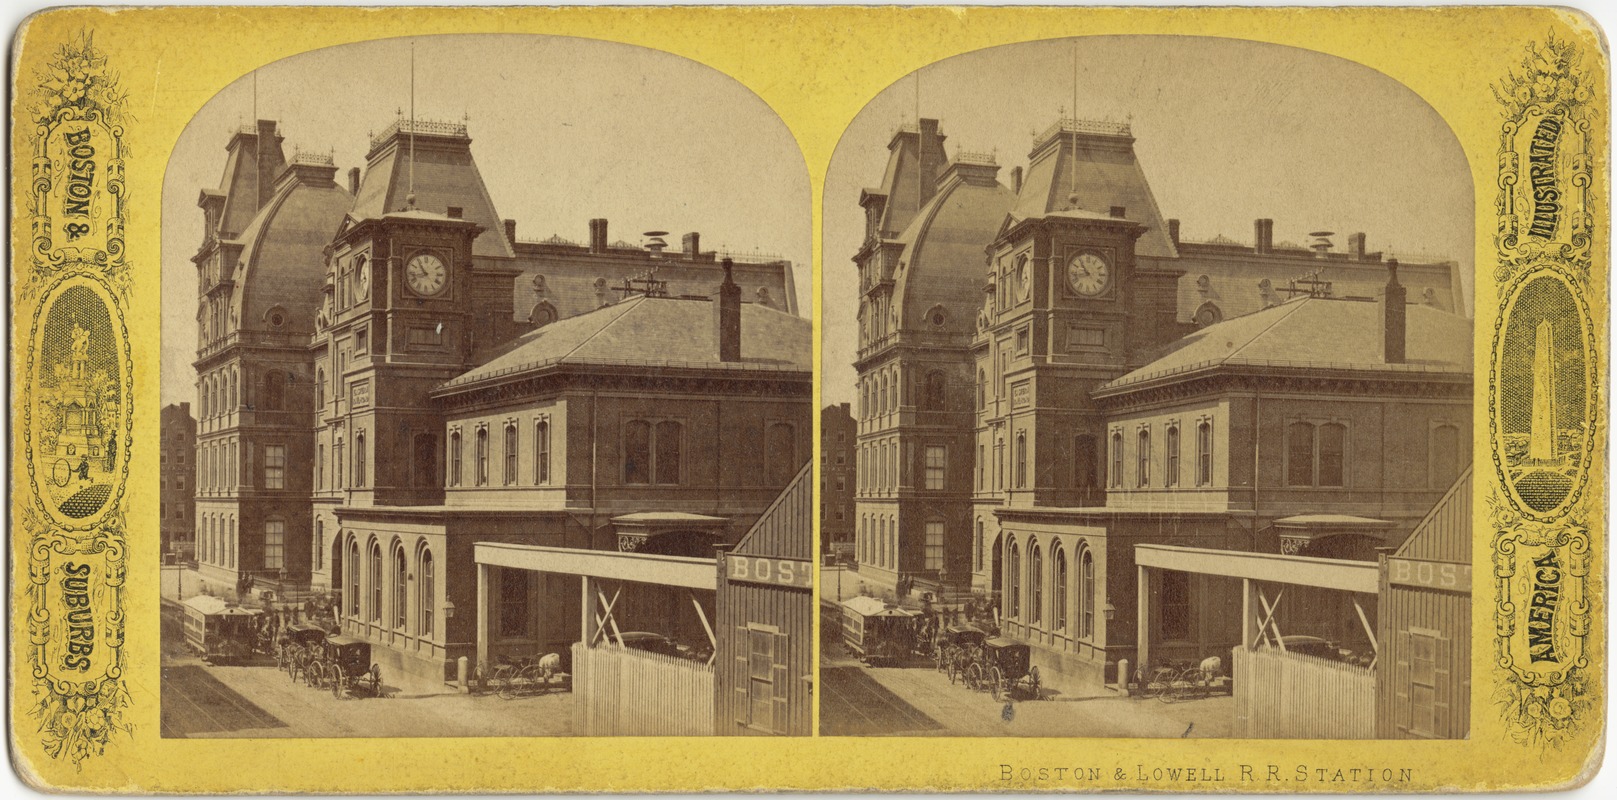 Boston & Lowell R.R. Station